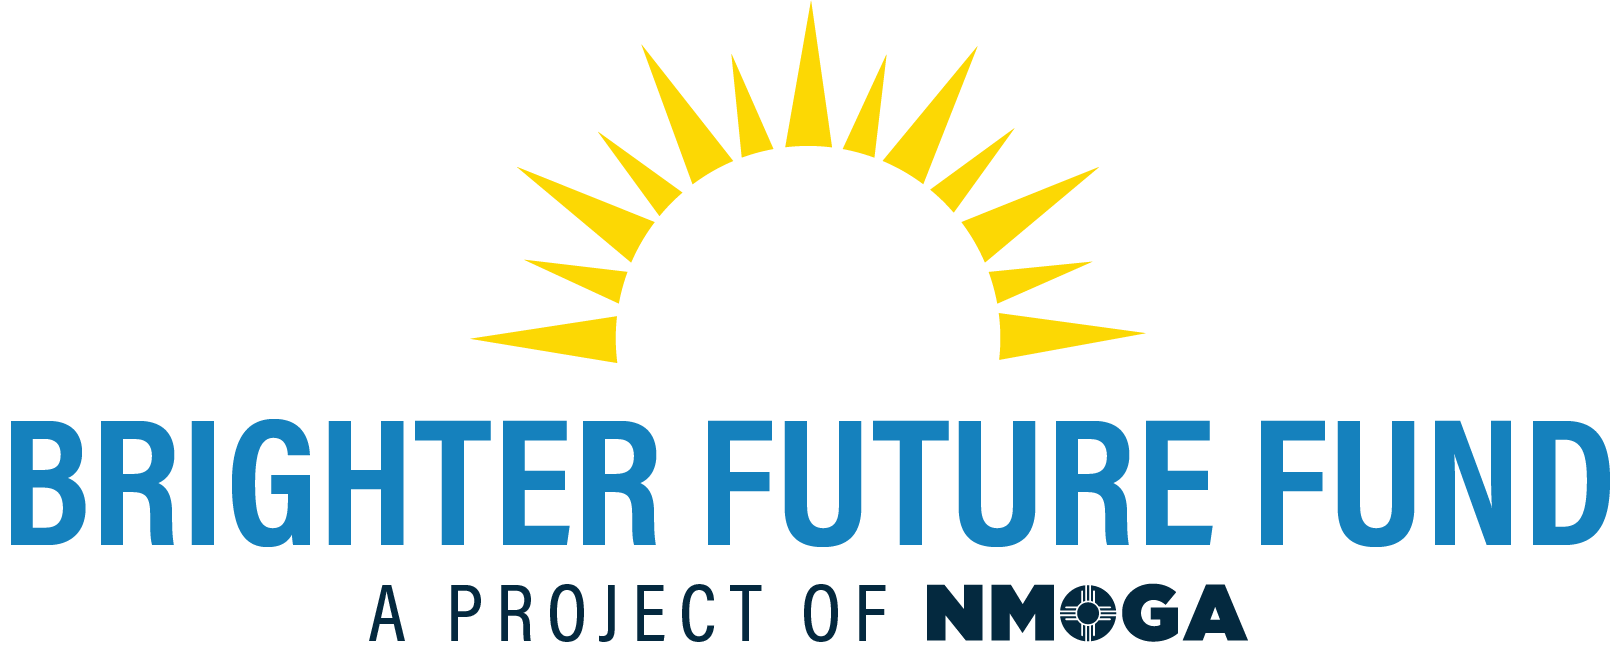 Brighter Future Fund Logo